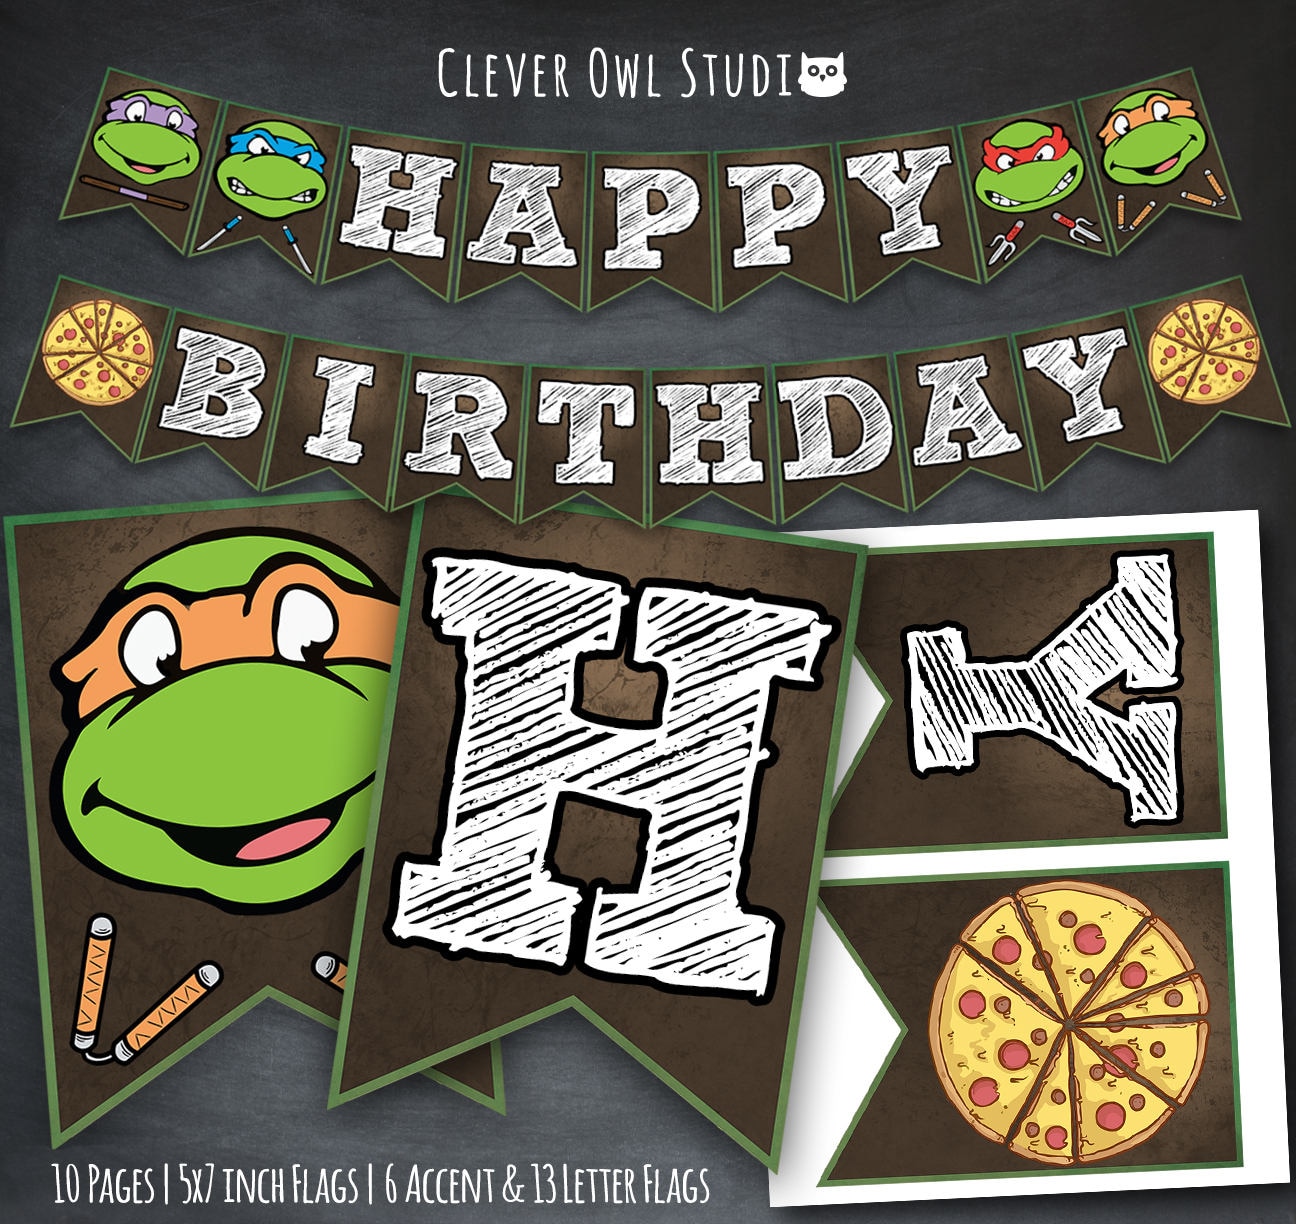 Boy's Teenage Mutant Ninja Turtles 4th Birthday Pizza Party T-Shirt - Royal  Blue - X Small